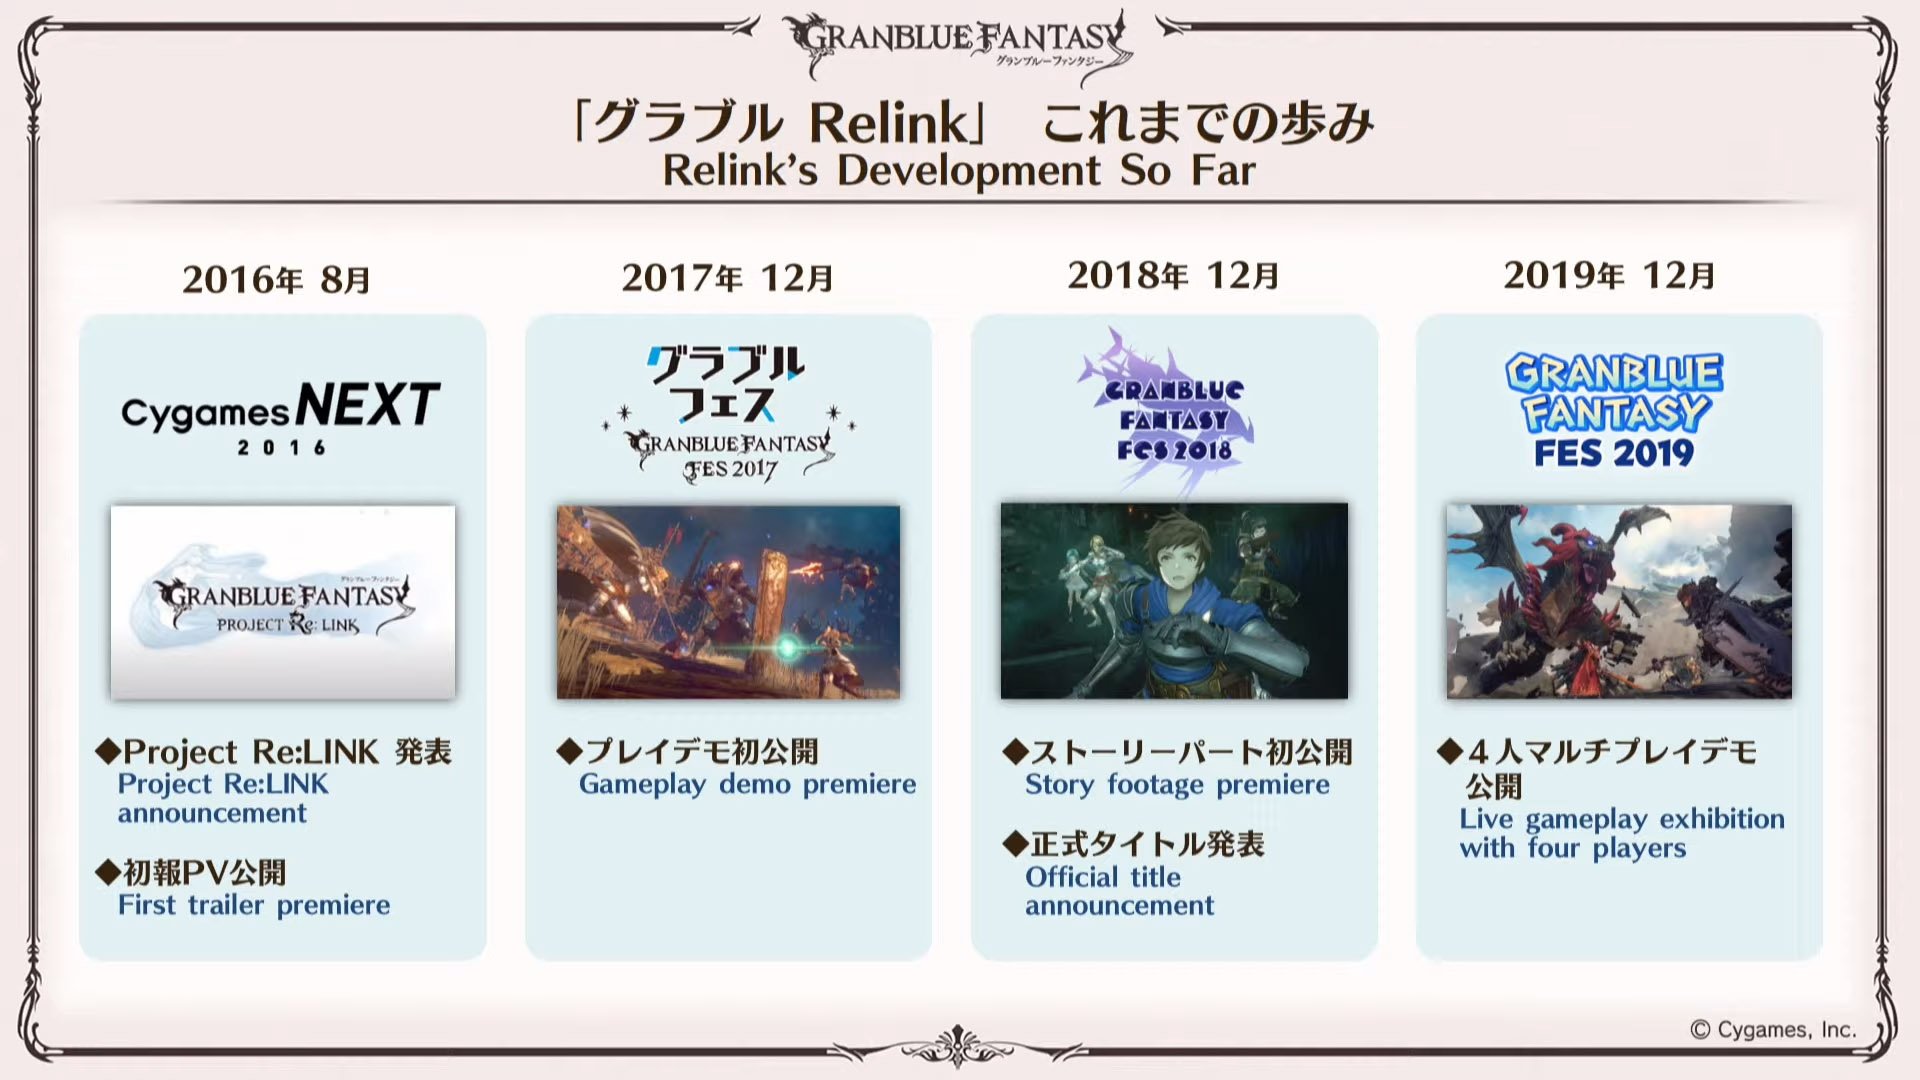 Granblue Fantasy: Relink Gets New Media - RPGamer